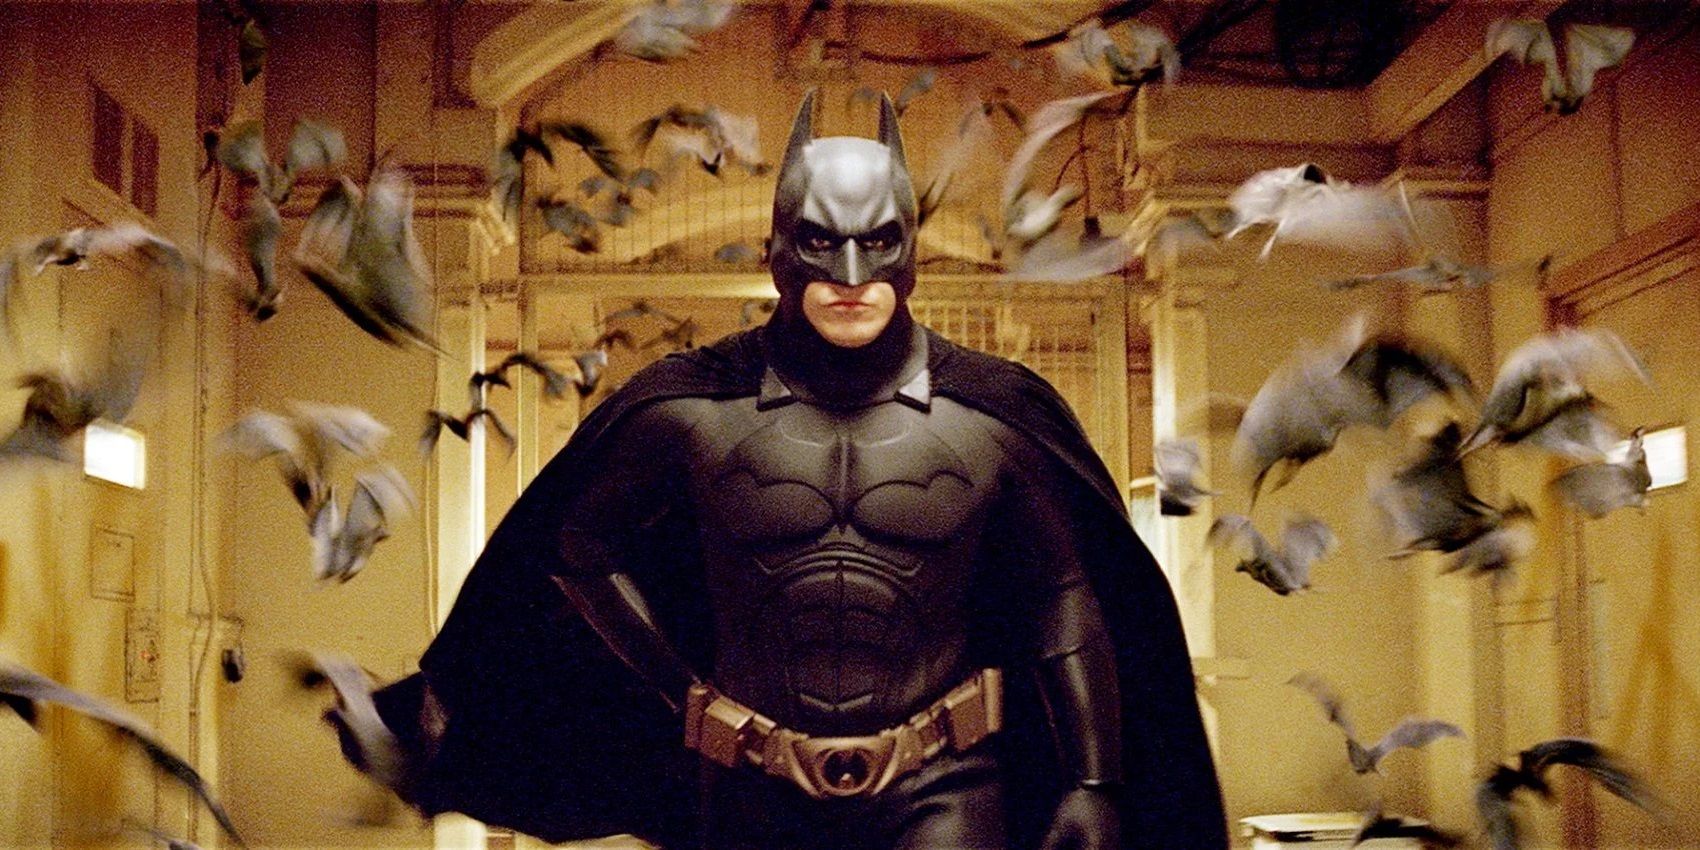 Christian Bale's Batman running down a hall with bats flying behind him in Batman Begins.